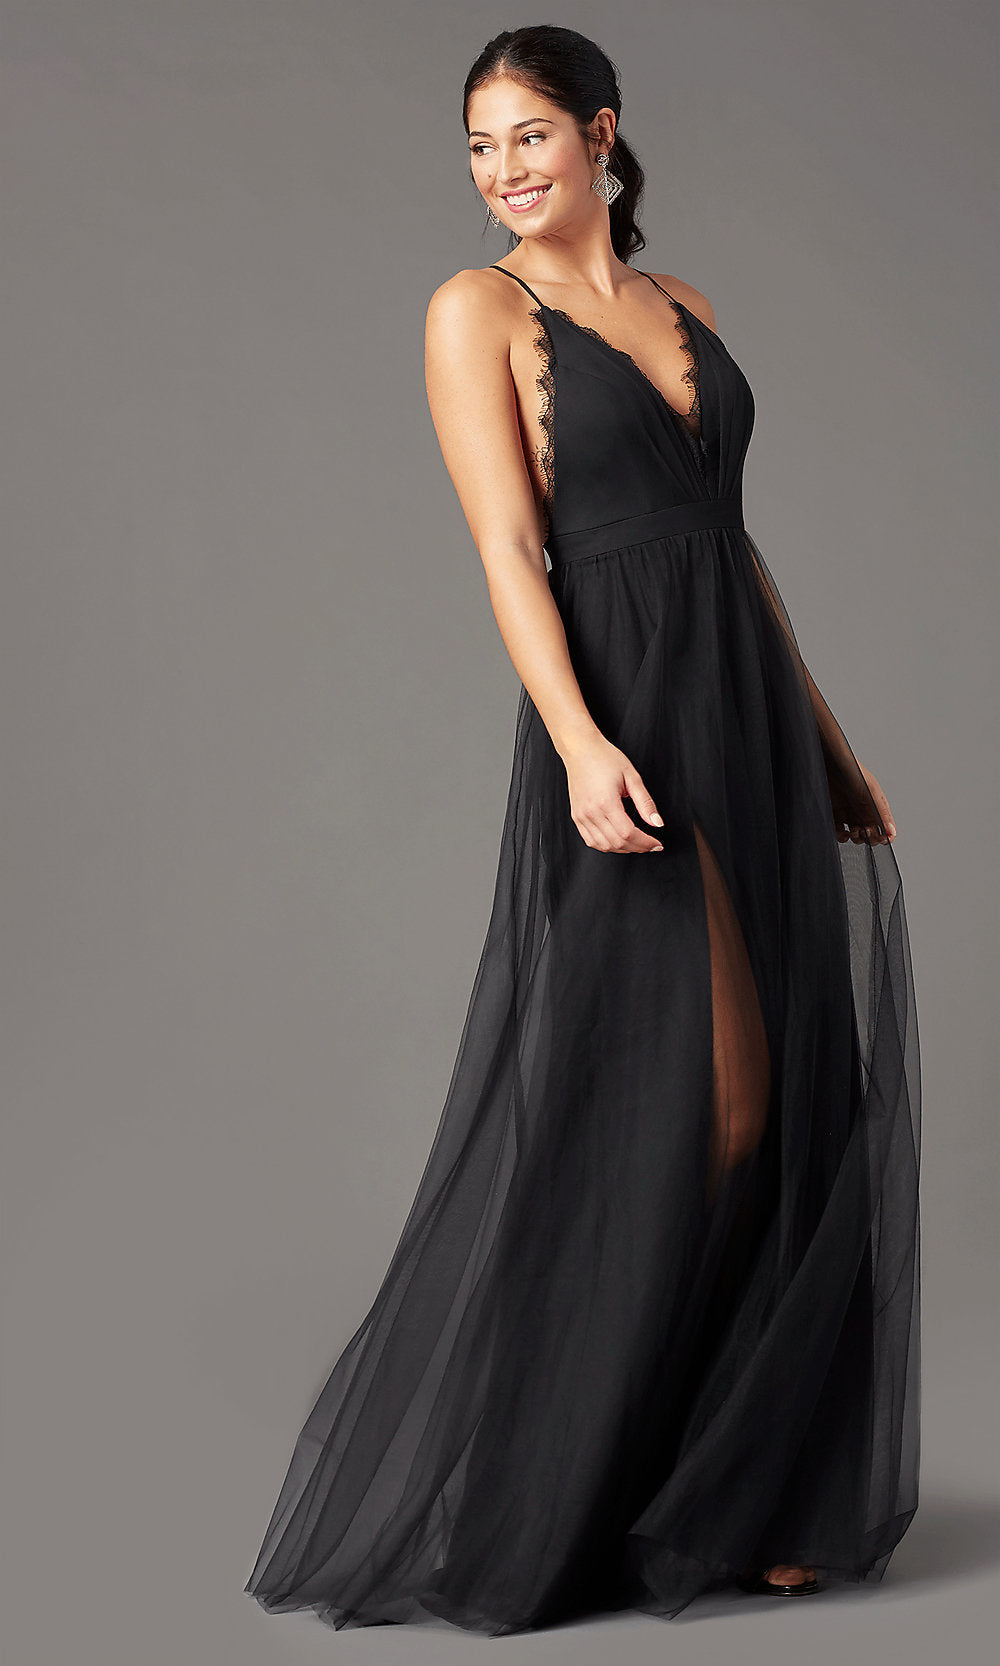 Black Open-Back Long Tulle Formal Prom Dress by PromGirl